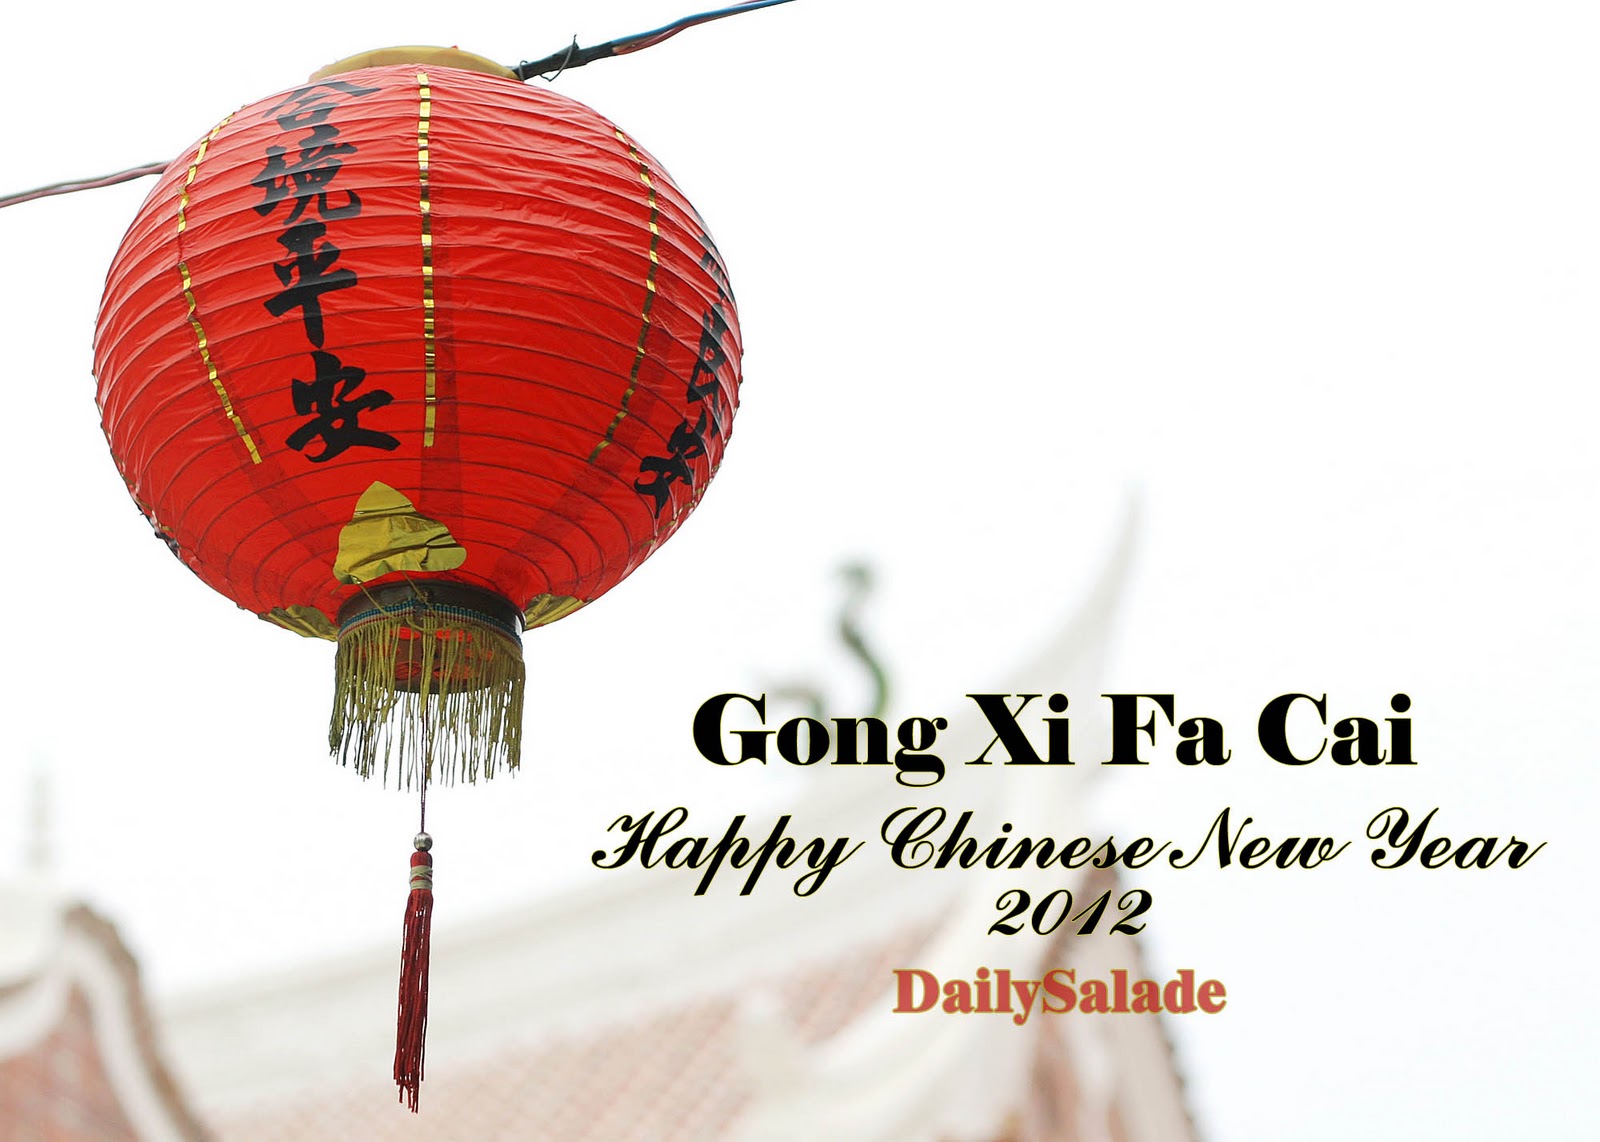 DailySalade: A Belated Gong Xi fa Cai